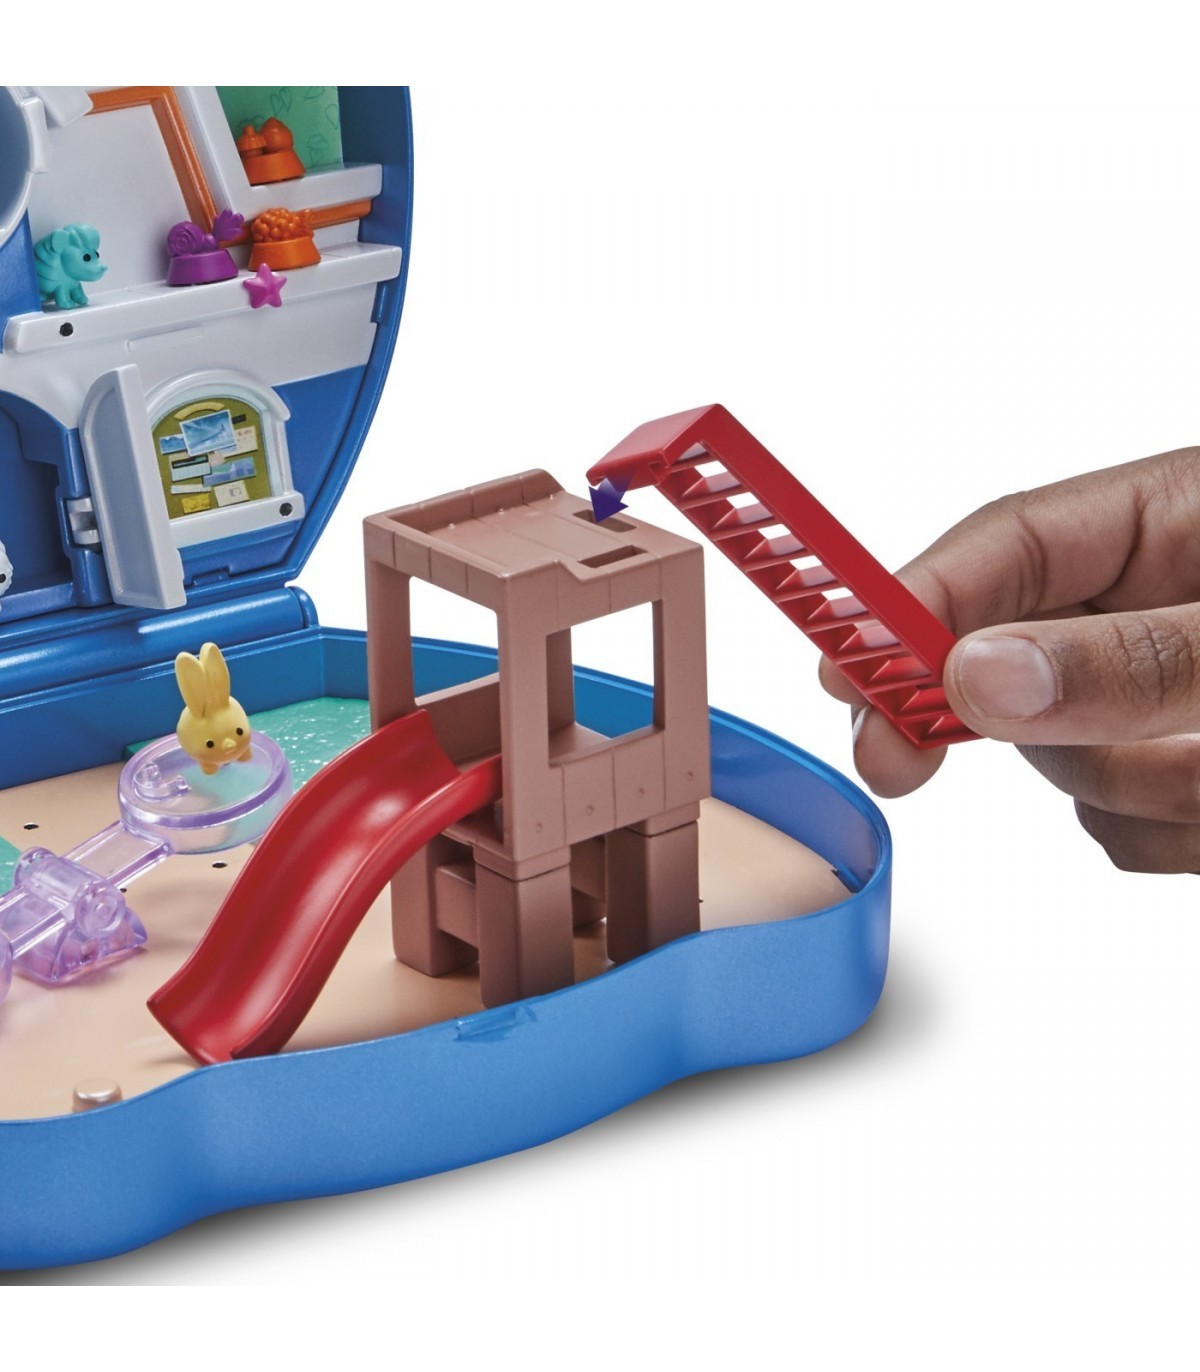 Set de joaca - My Little Pony Mini World Magic - Compact Creation Critter Corner | Hasbro